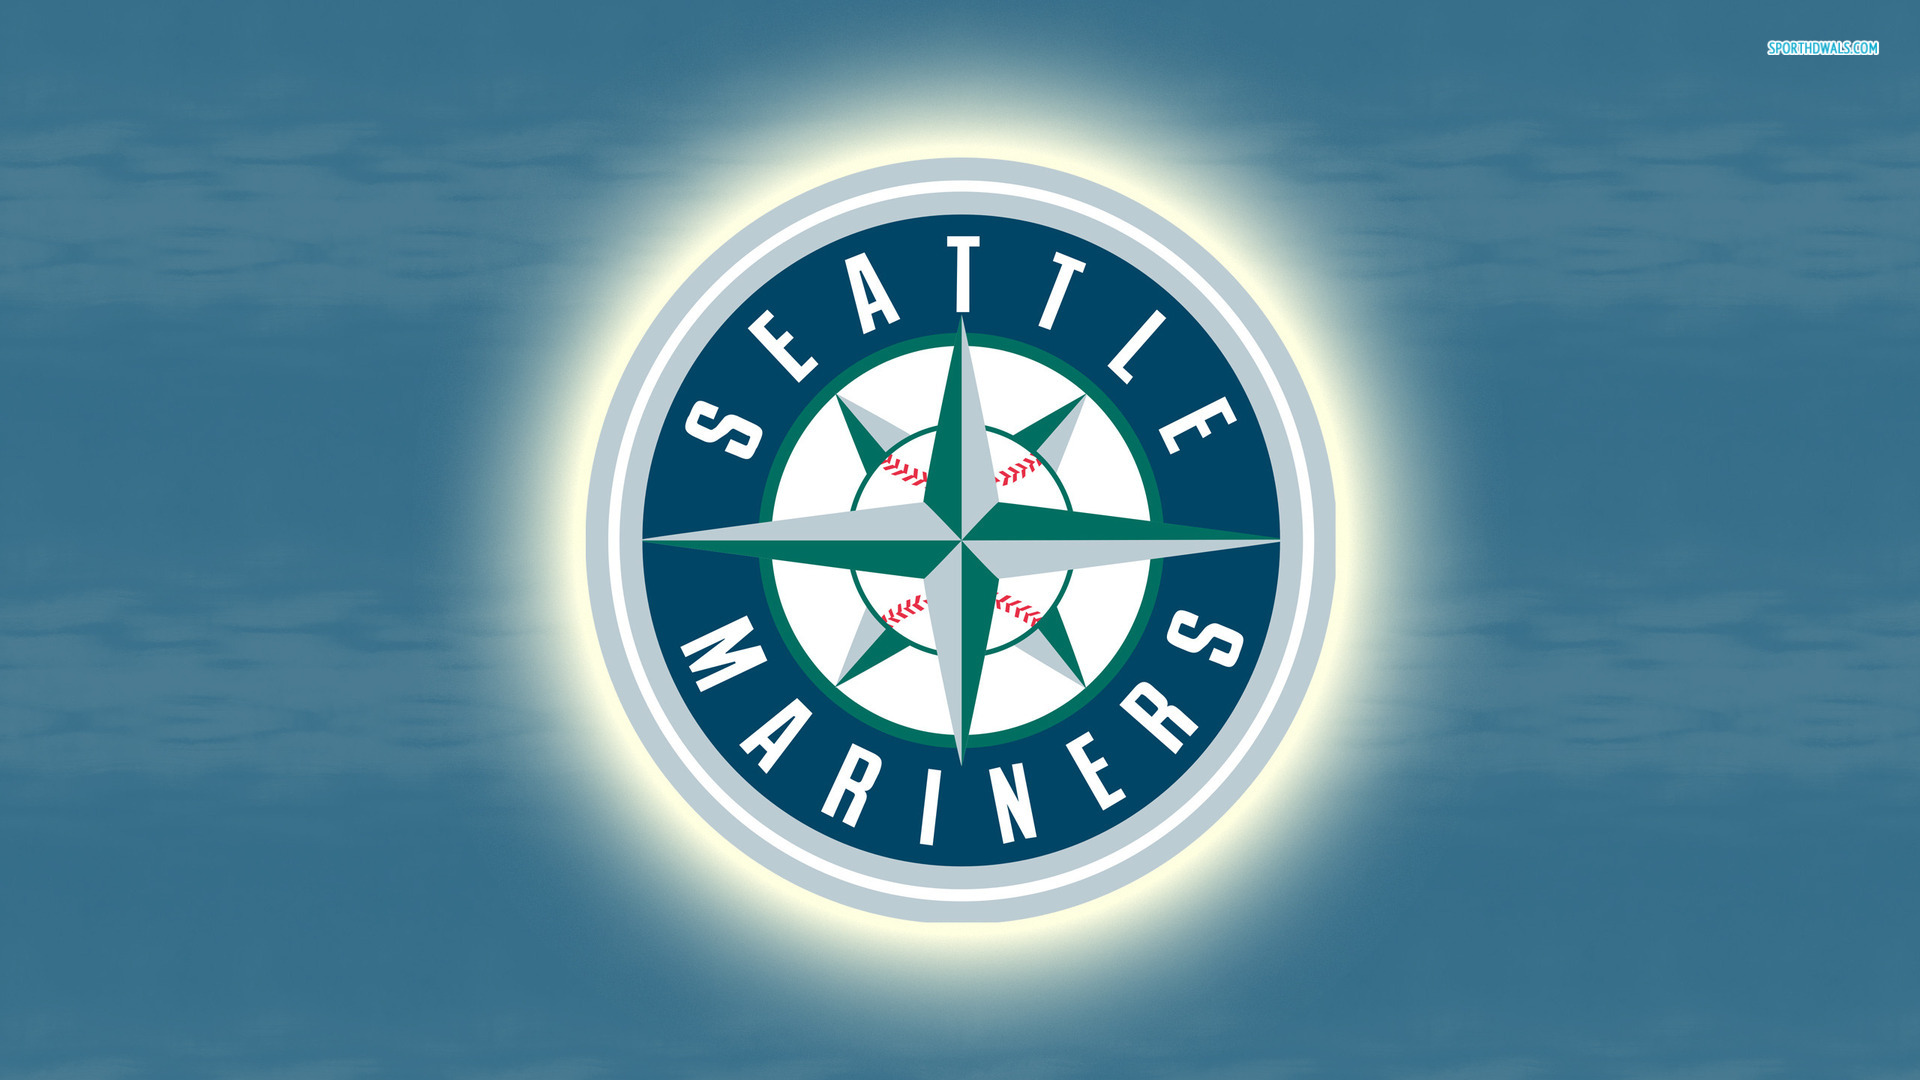 Seattle Mariners HD Wallpaper Background